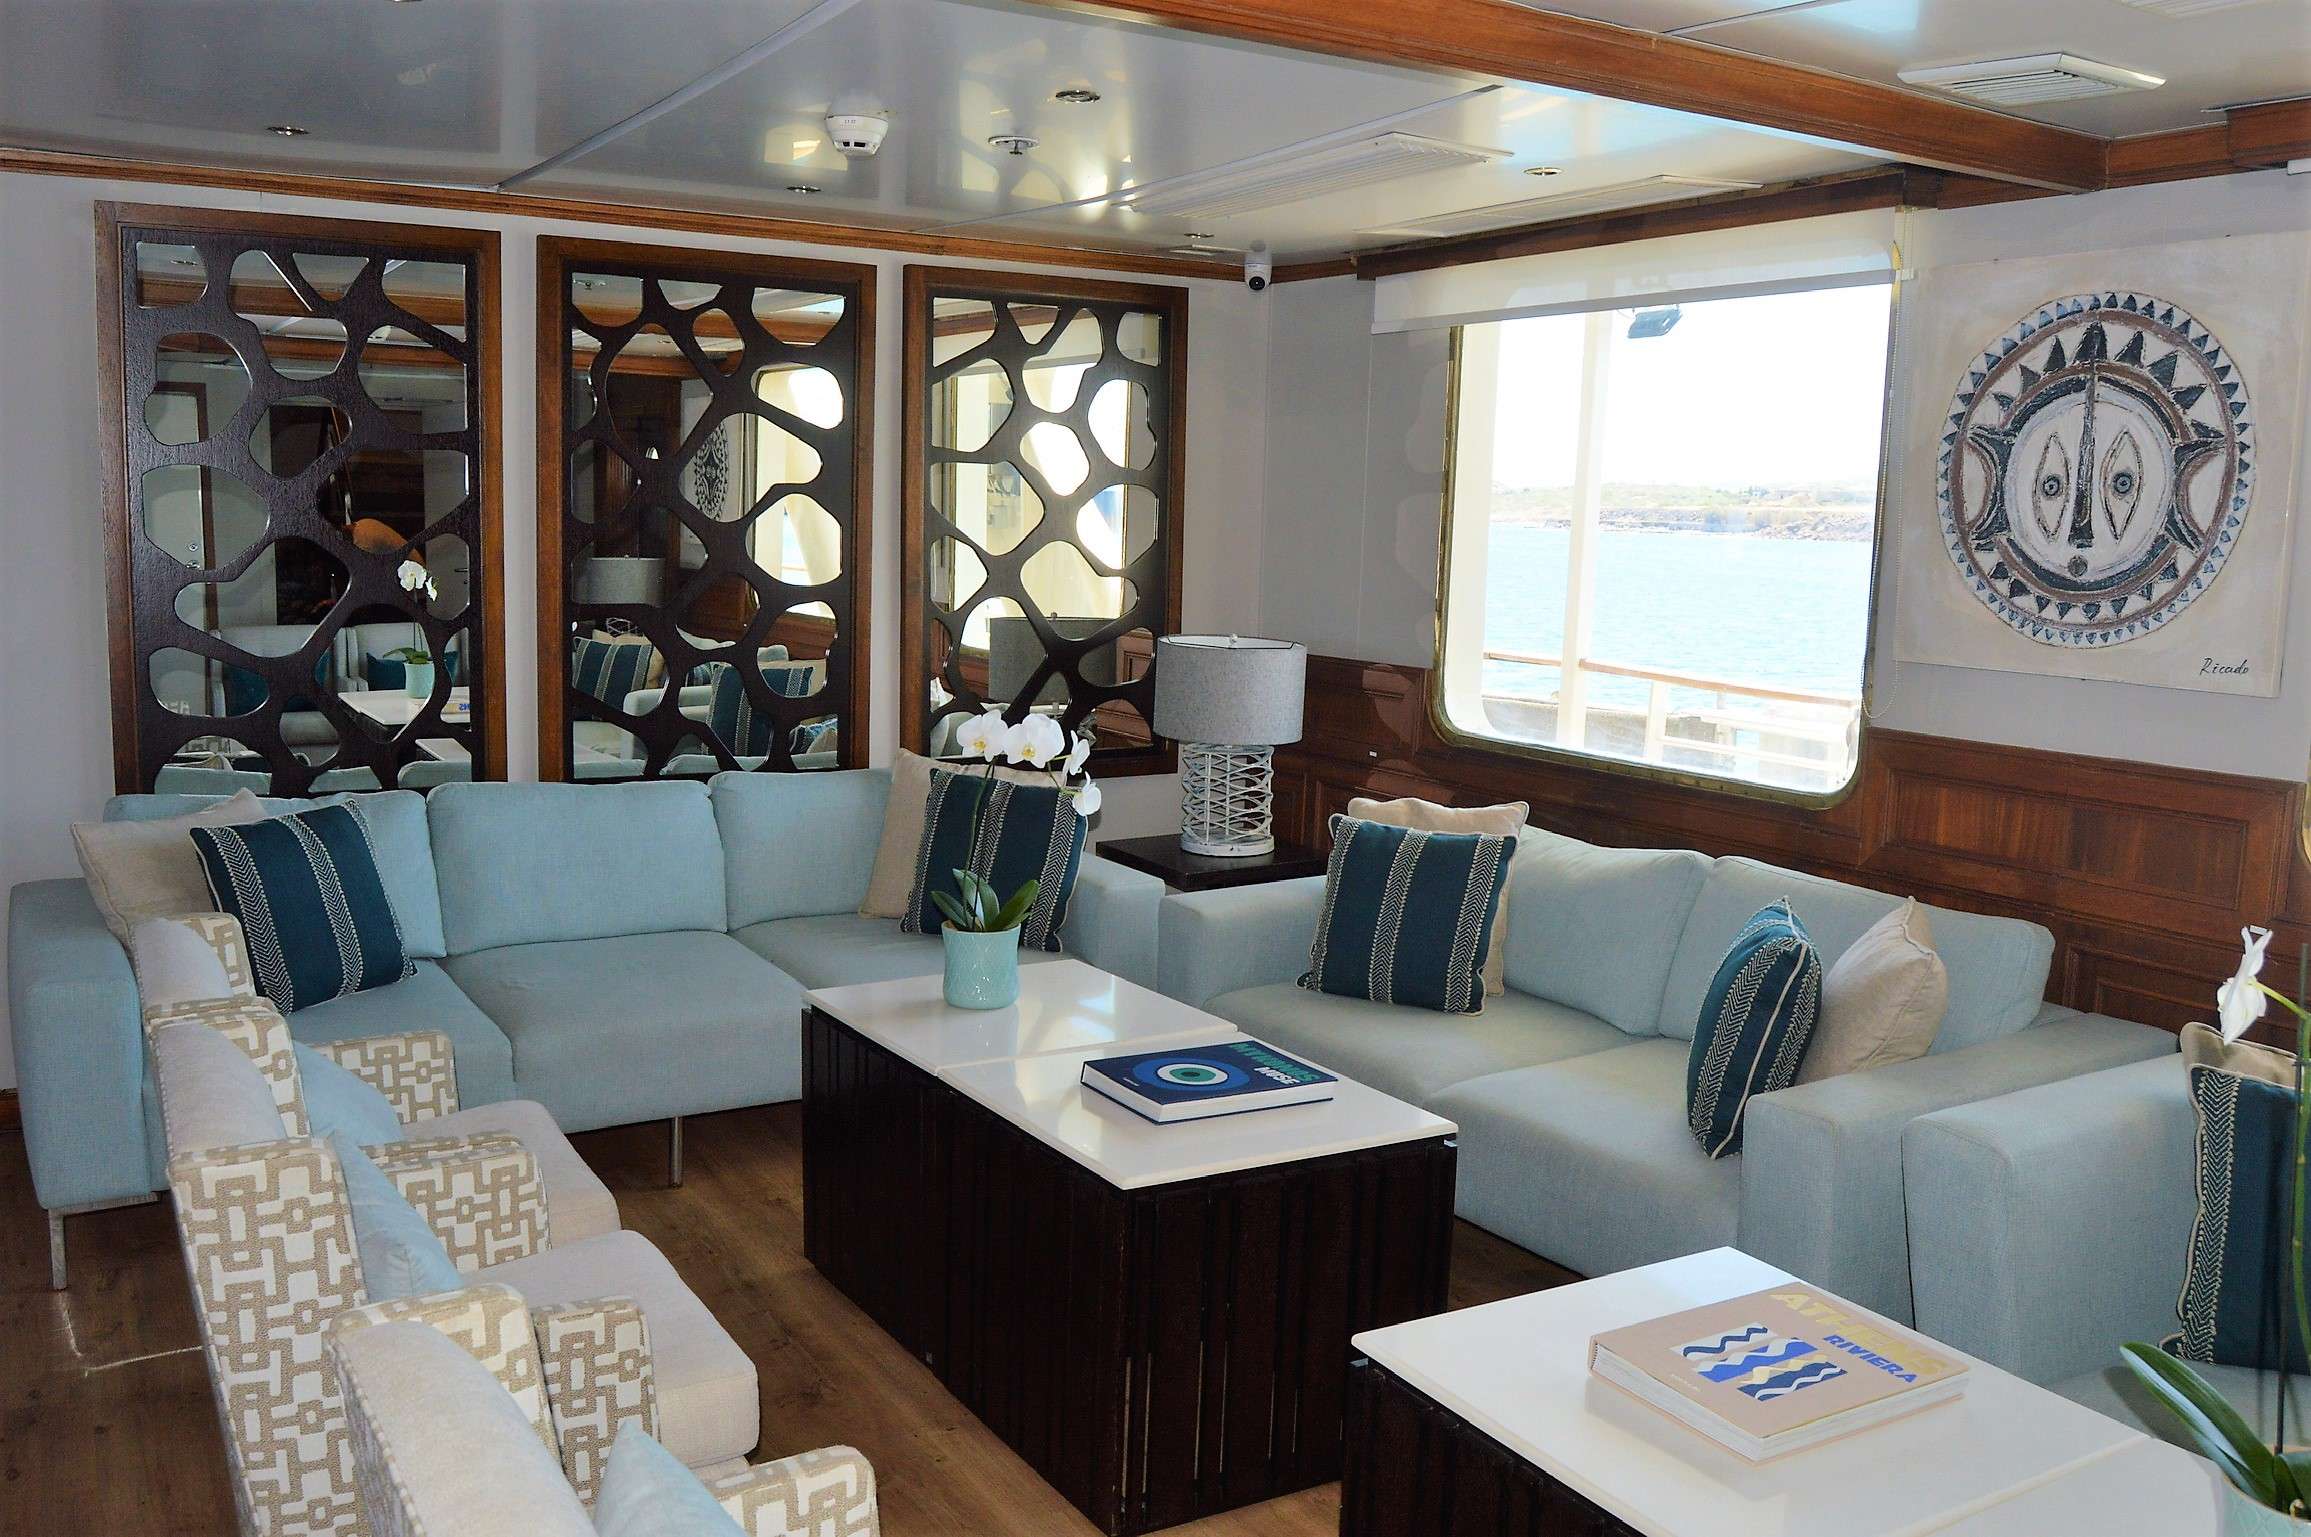 ELYSIUM - Motor Boat Charter worldwide & Boat hire in Greece, Red Sea 2